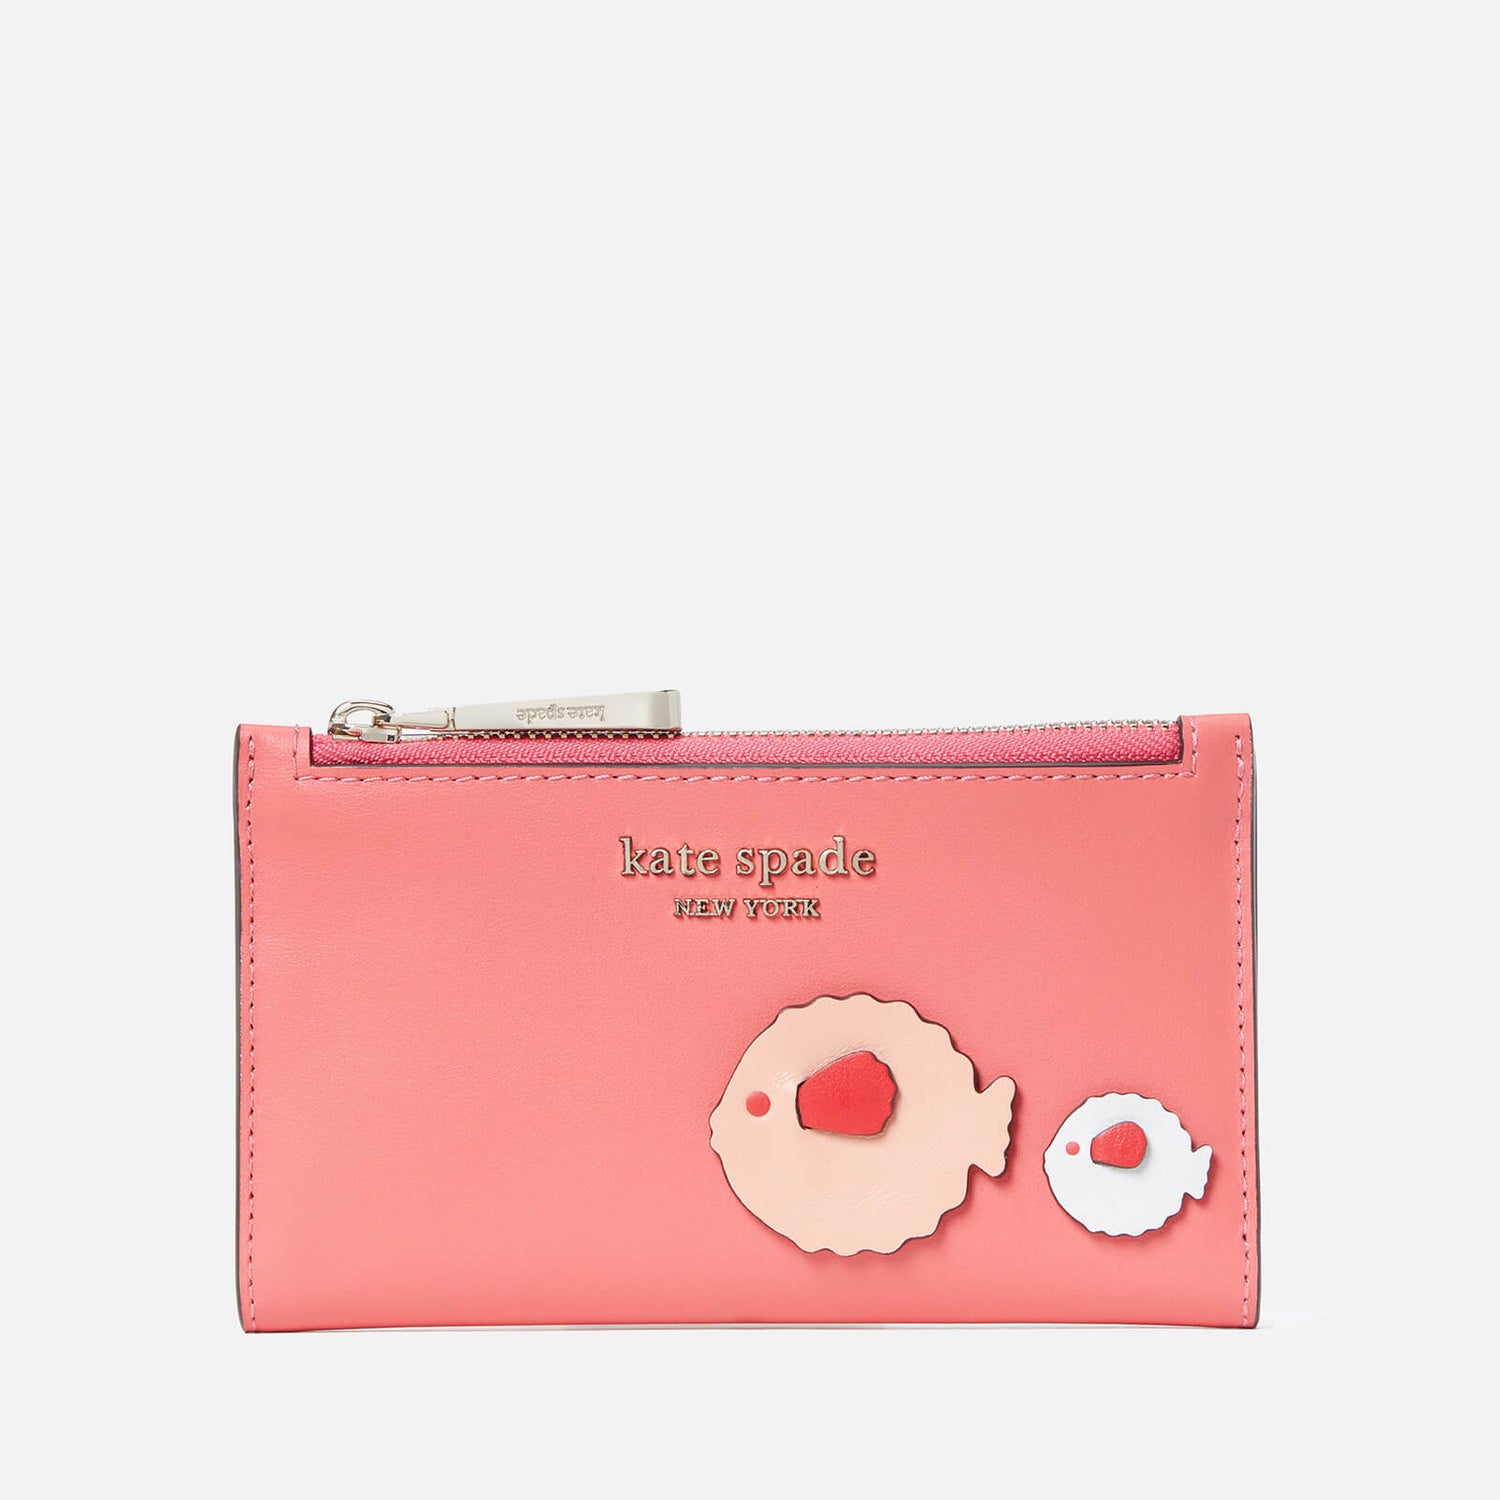 Kate Spade New York Women's Puffy Small Slim Bifold Wallet - Peach Melba Multi